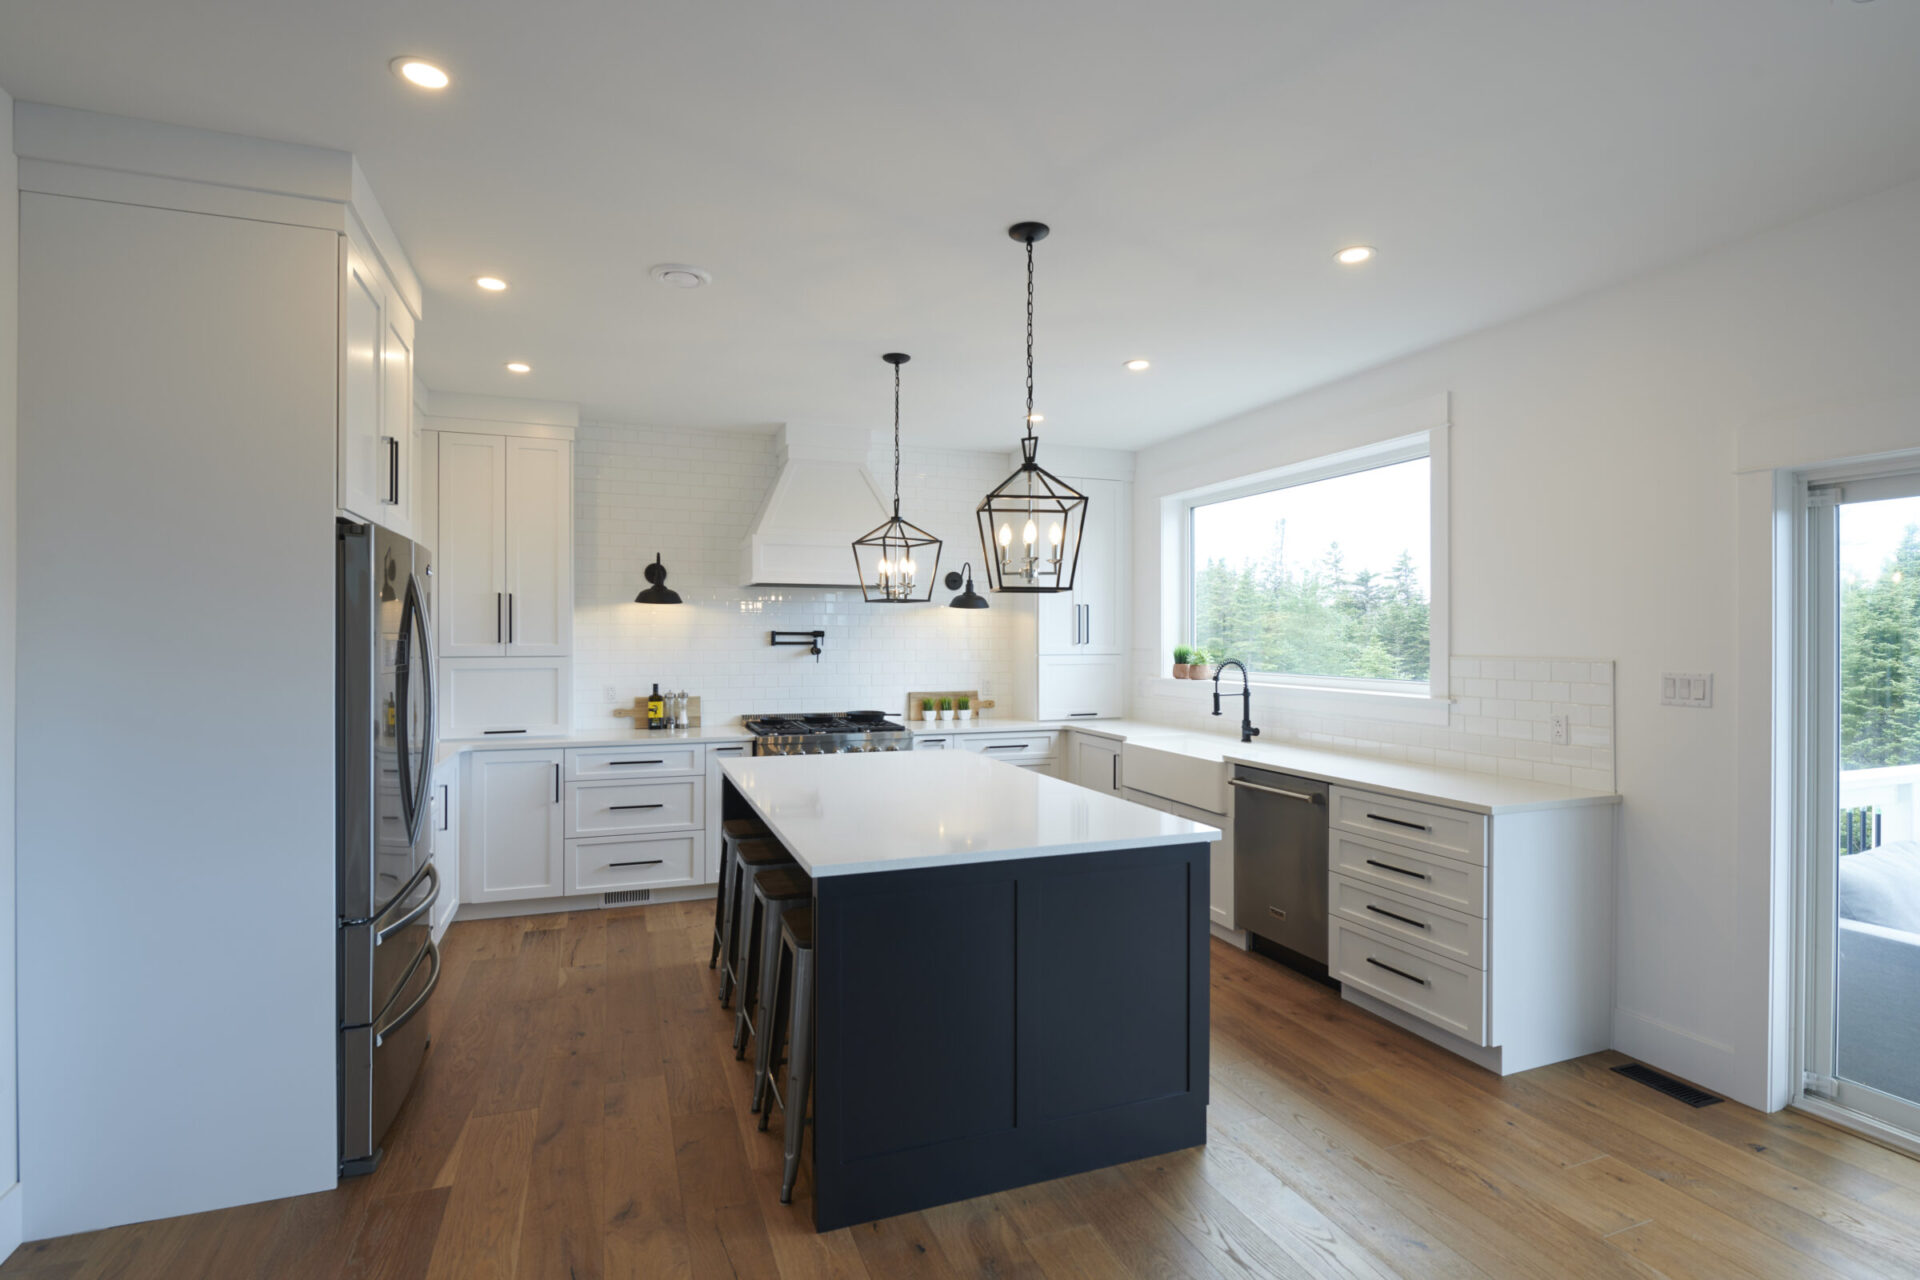 A modern kitchen with white cabinetry, dark island, stainless steel appliances, pendant lights, subway tile backsplash, hardwood floors, and natural light.